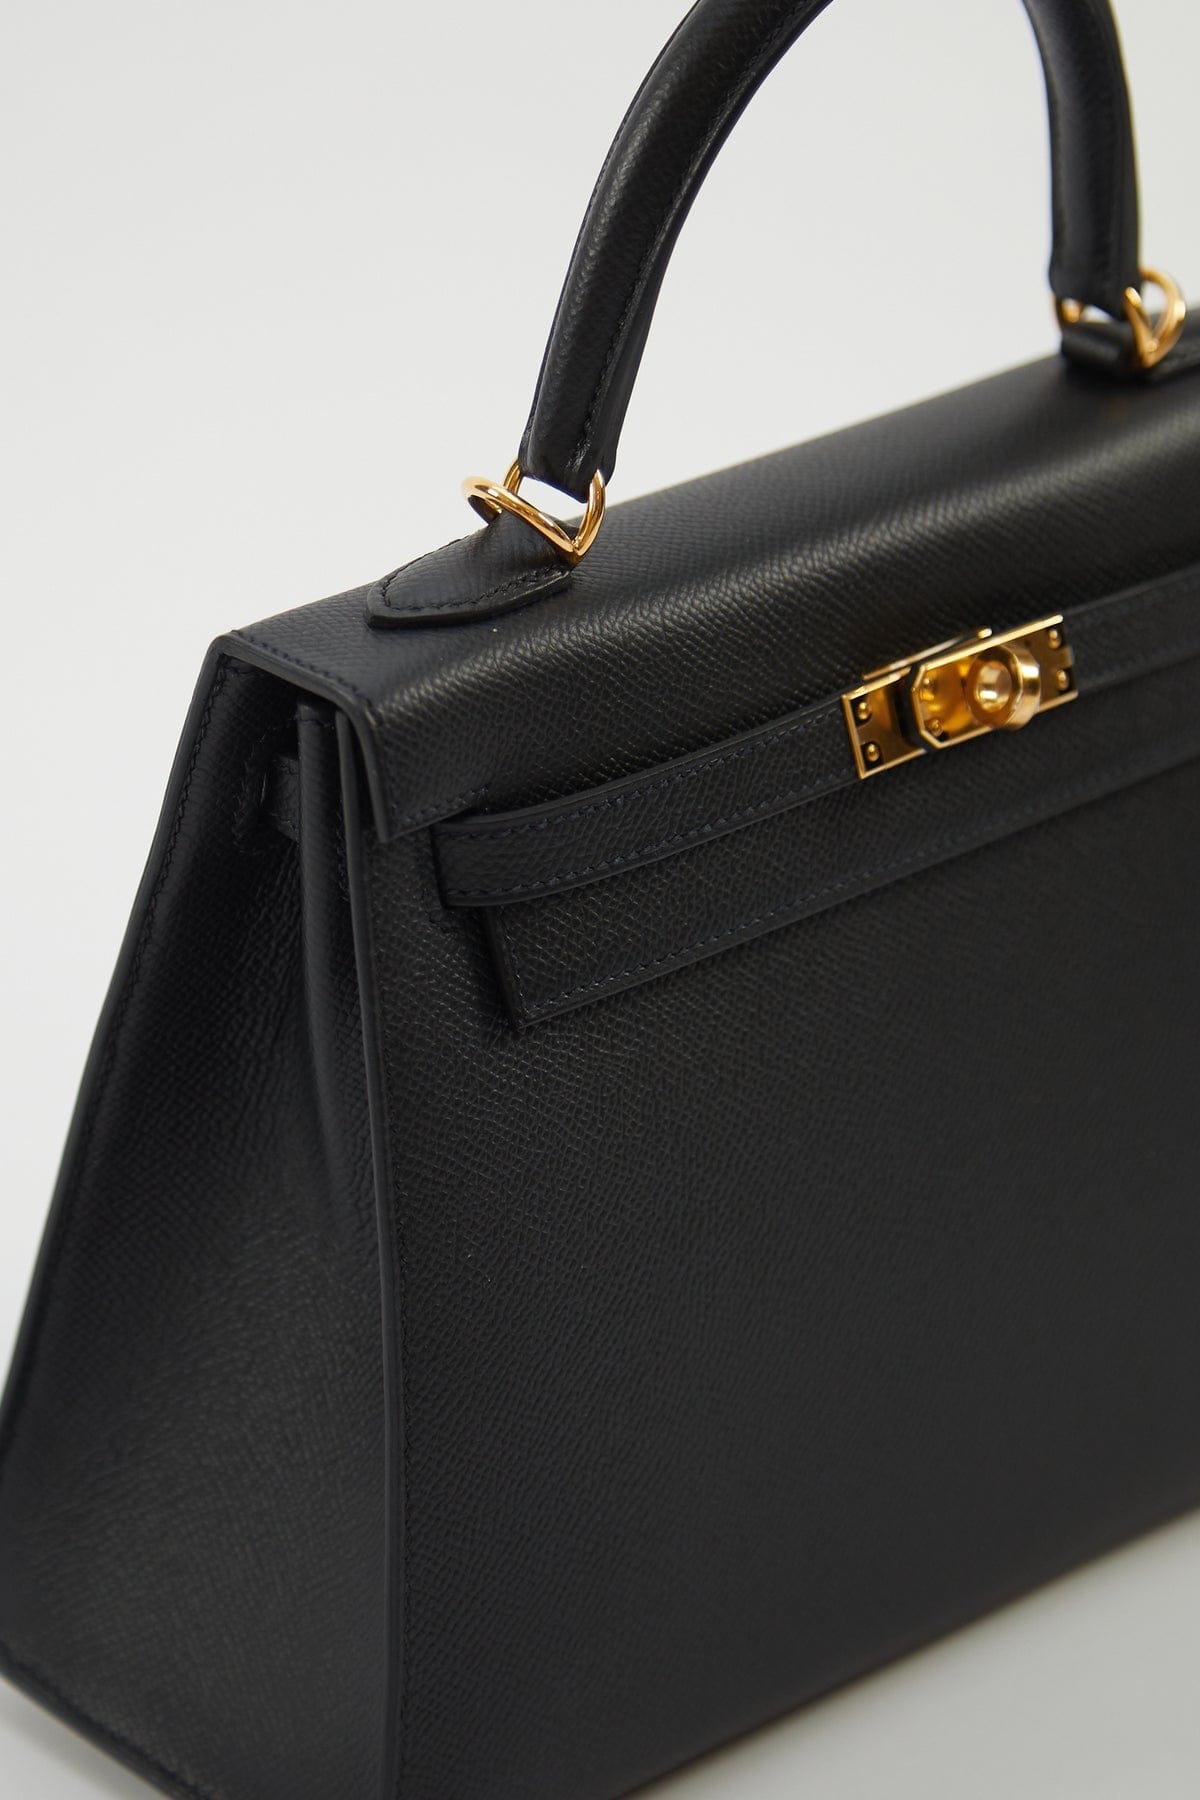 LuxuryPromise HERMÈS KELLY 28CM BLACK Epsom Leather with Gold Hardware